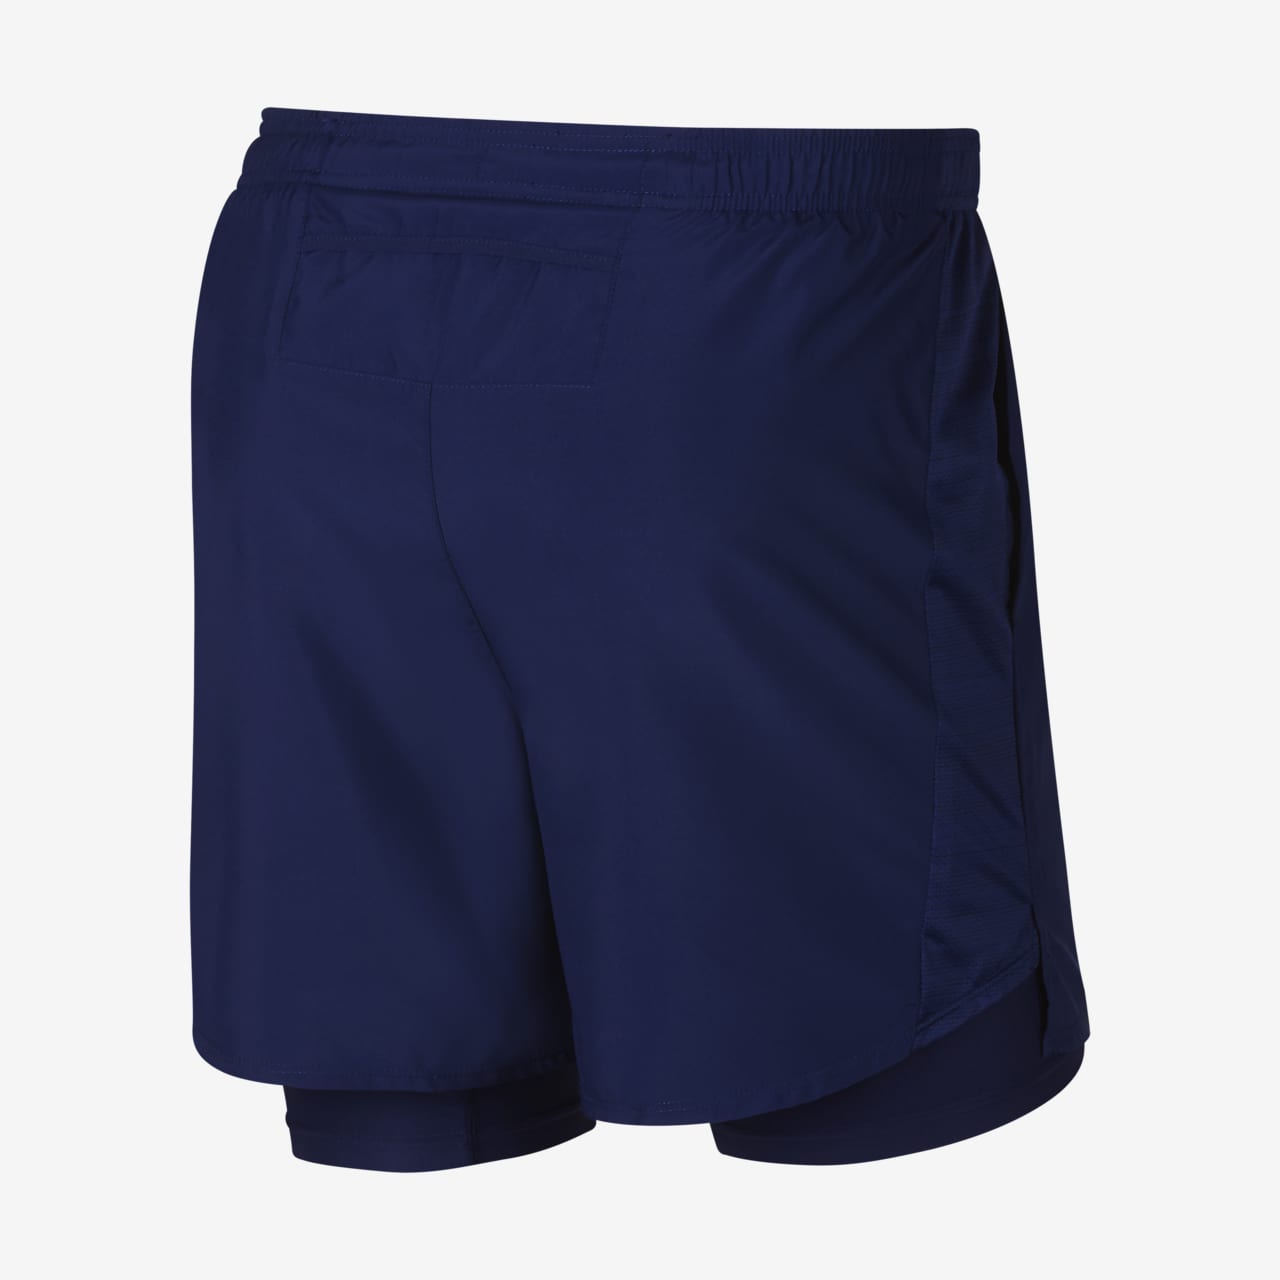 nike flex challenger 7 inch shorts